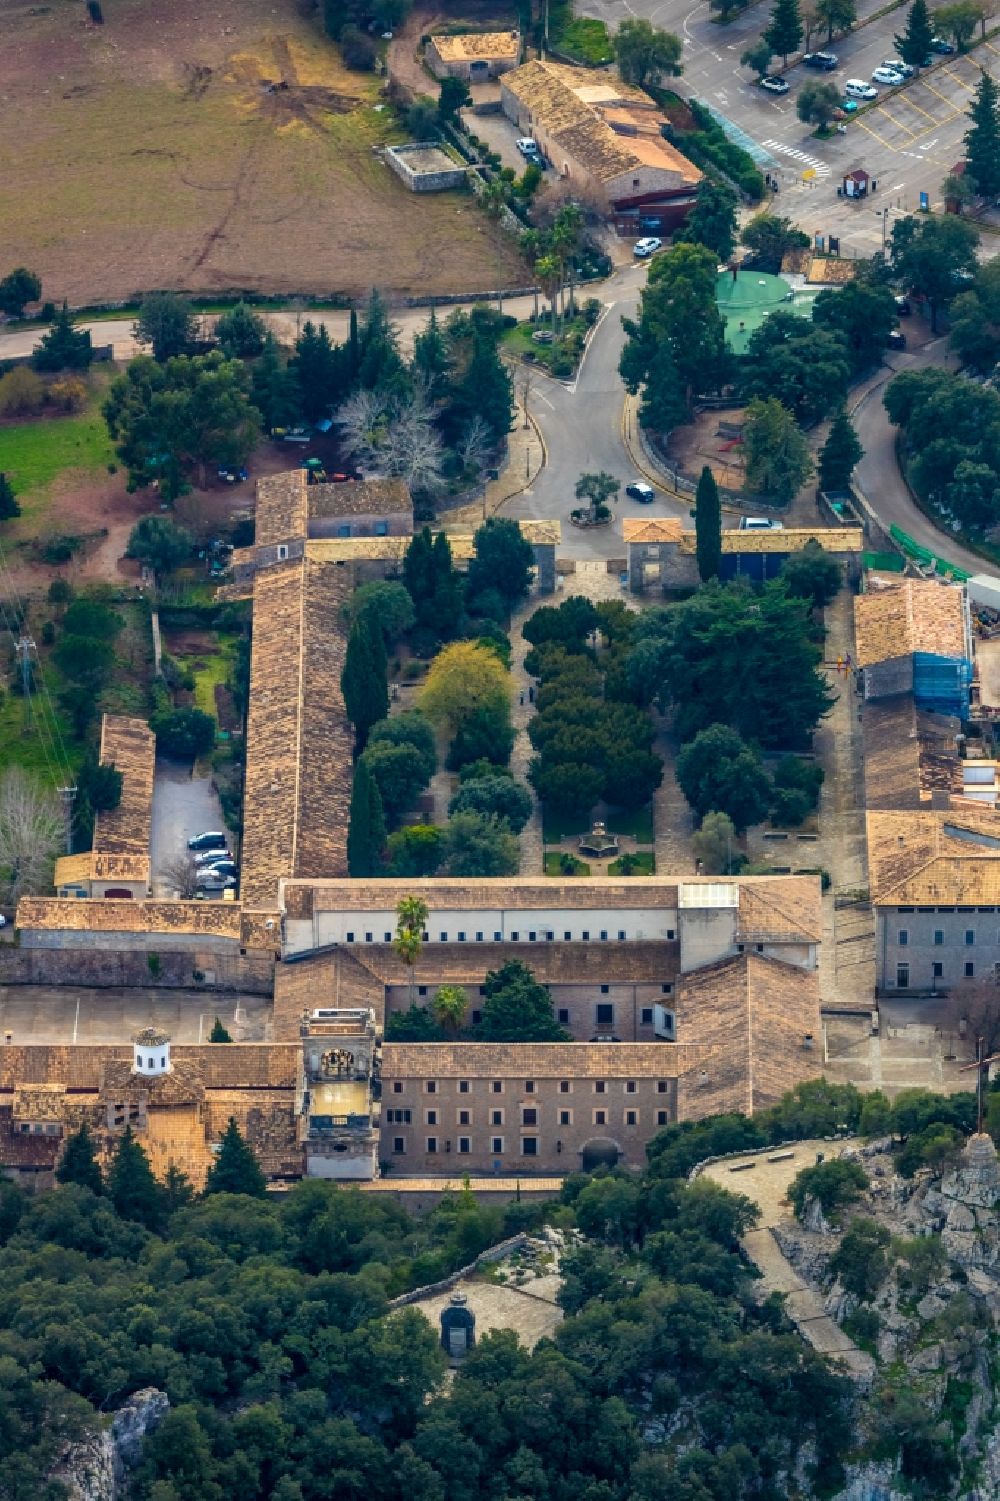 Escorca from above - Complex of buildings of the monastery Santuari de Lluc in Escorca in Balearic island of Mallorca, Spain